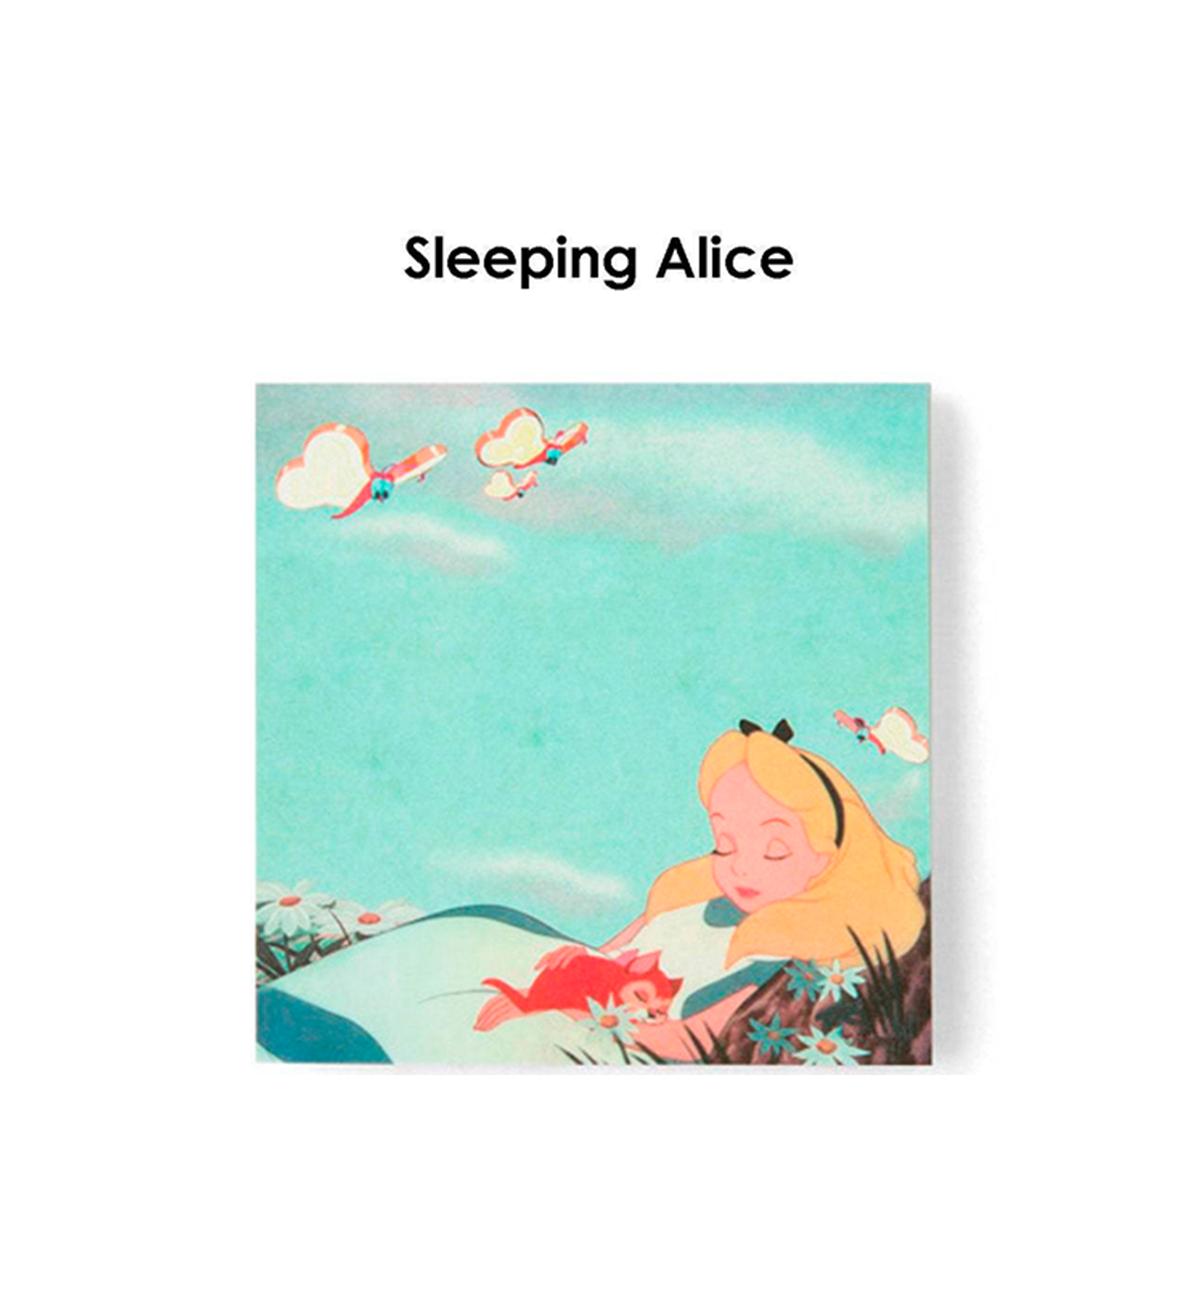 Alice In Wonderland Memopad